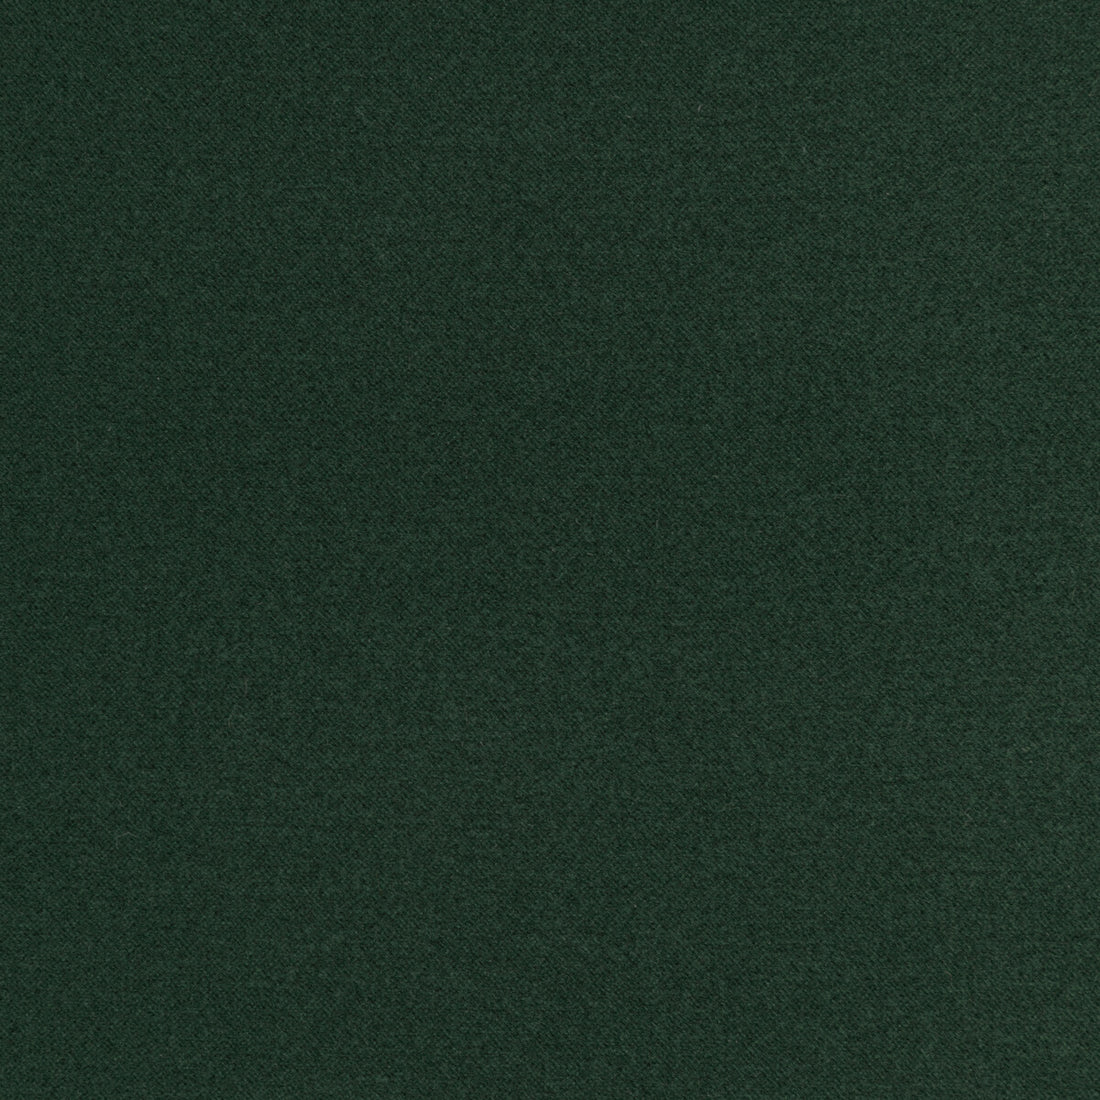 Kravet Smart fabric in 36110-3 color - pattern 36110.3.0 - by Kravet Smart in the Performance Kravetarmor collection